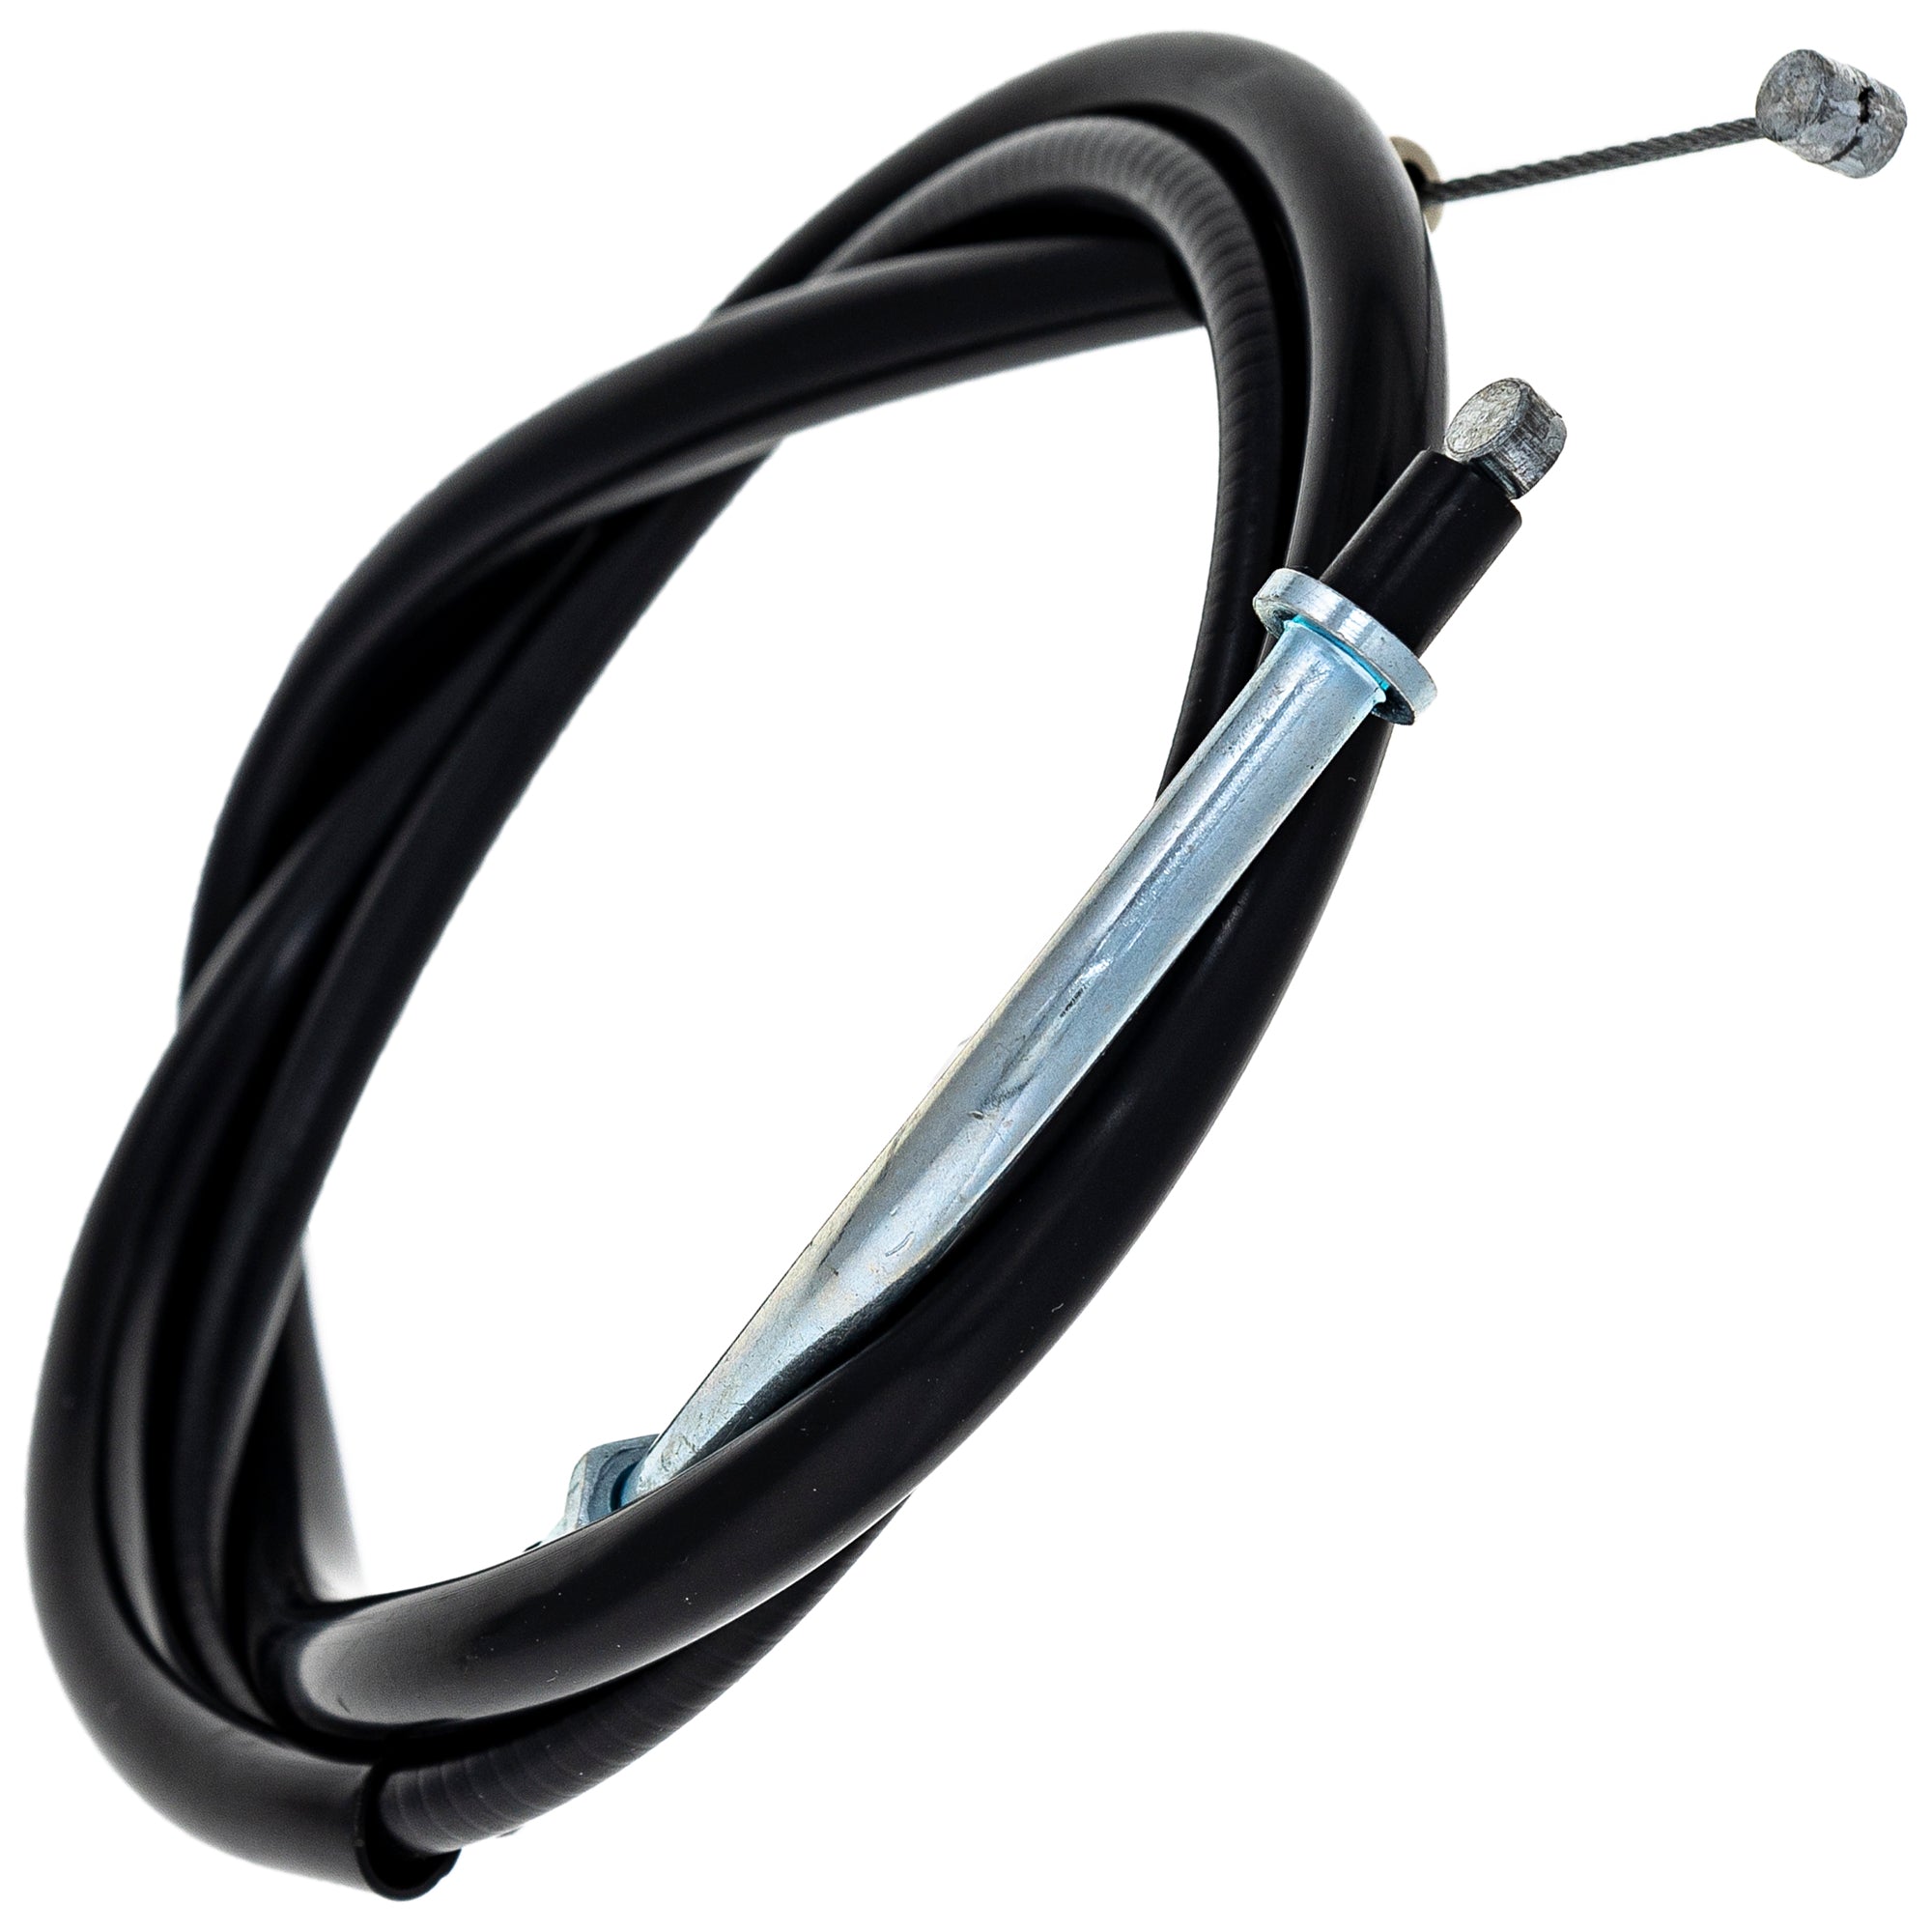 Throttle Cable for Yamaha Maxim Seca 550 650 XS750S 4U8-26311-00-00